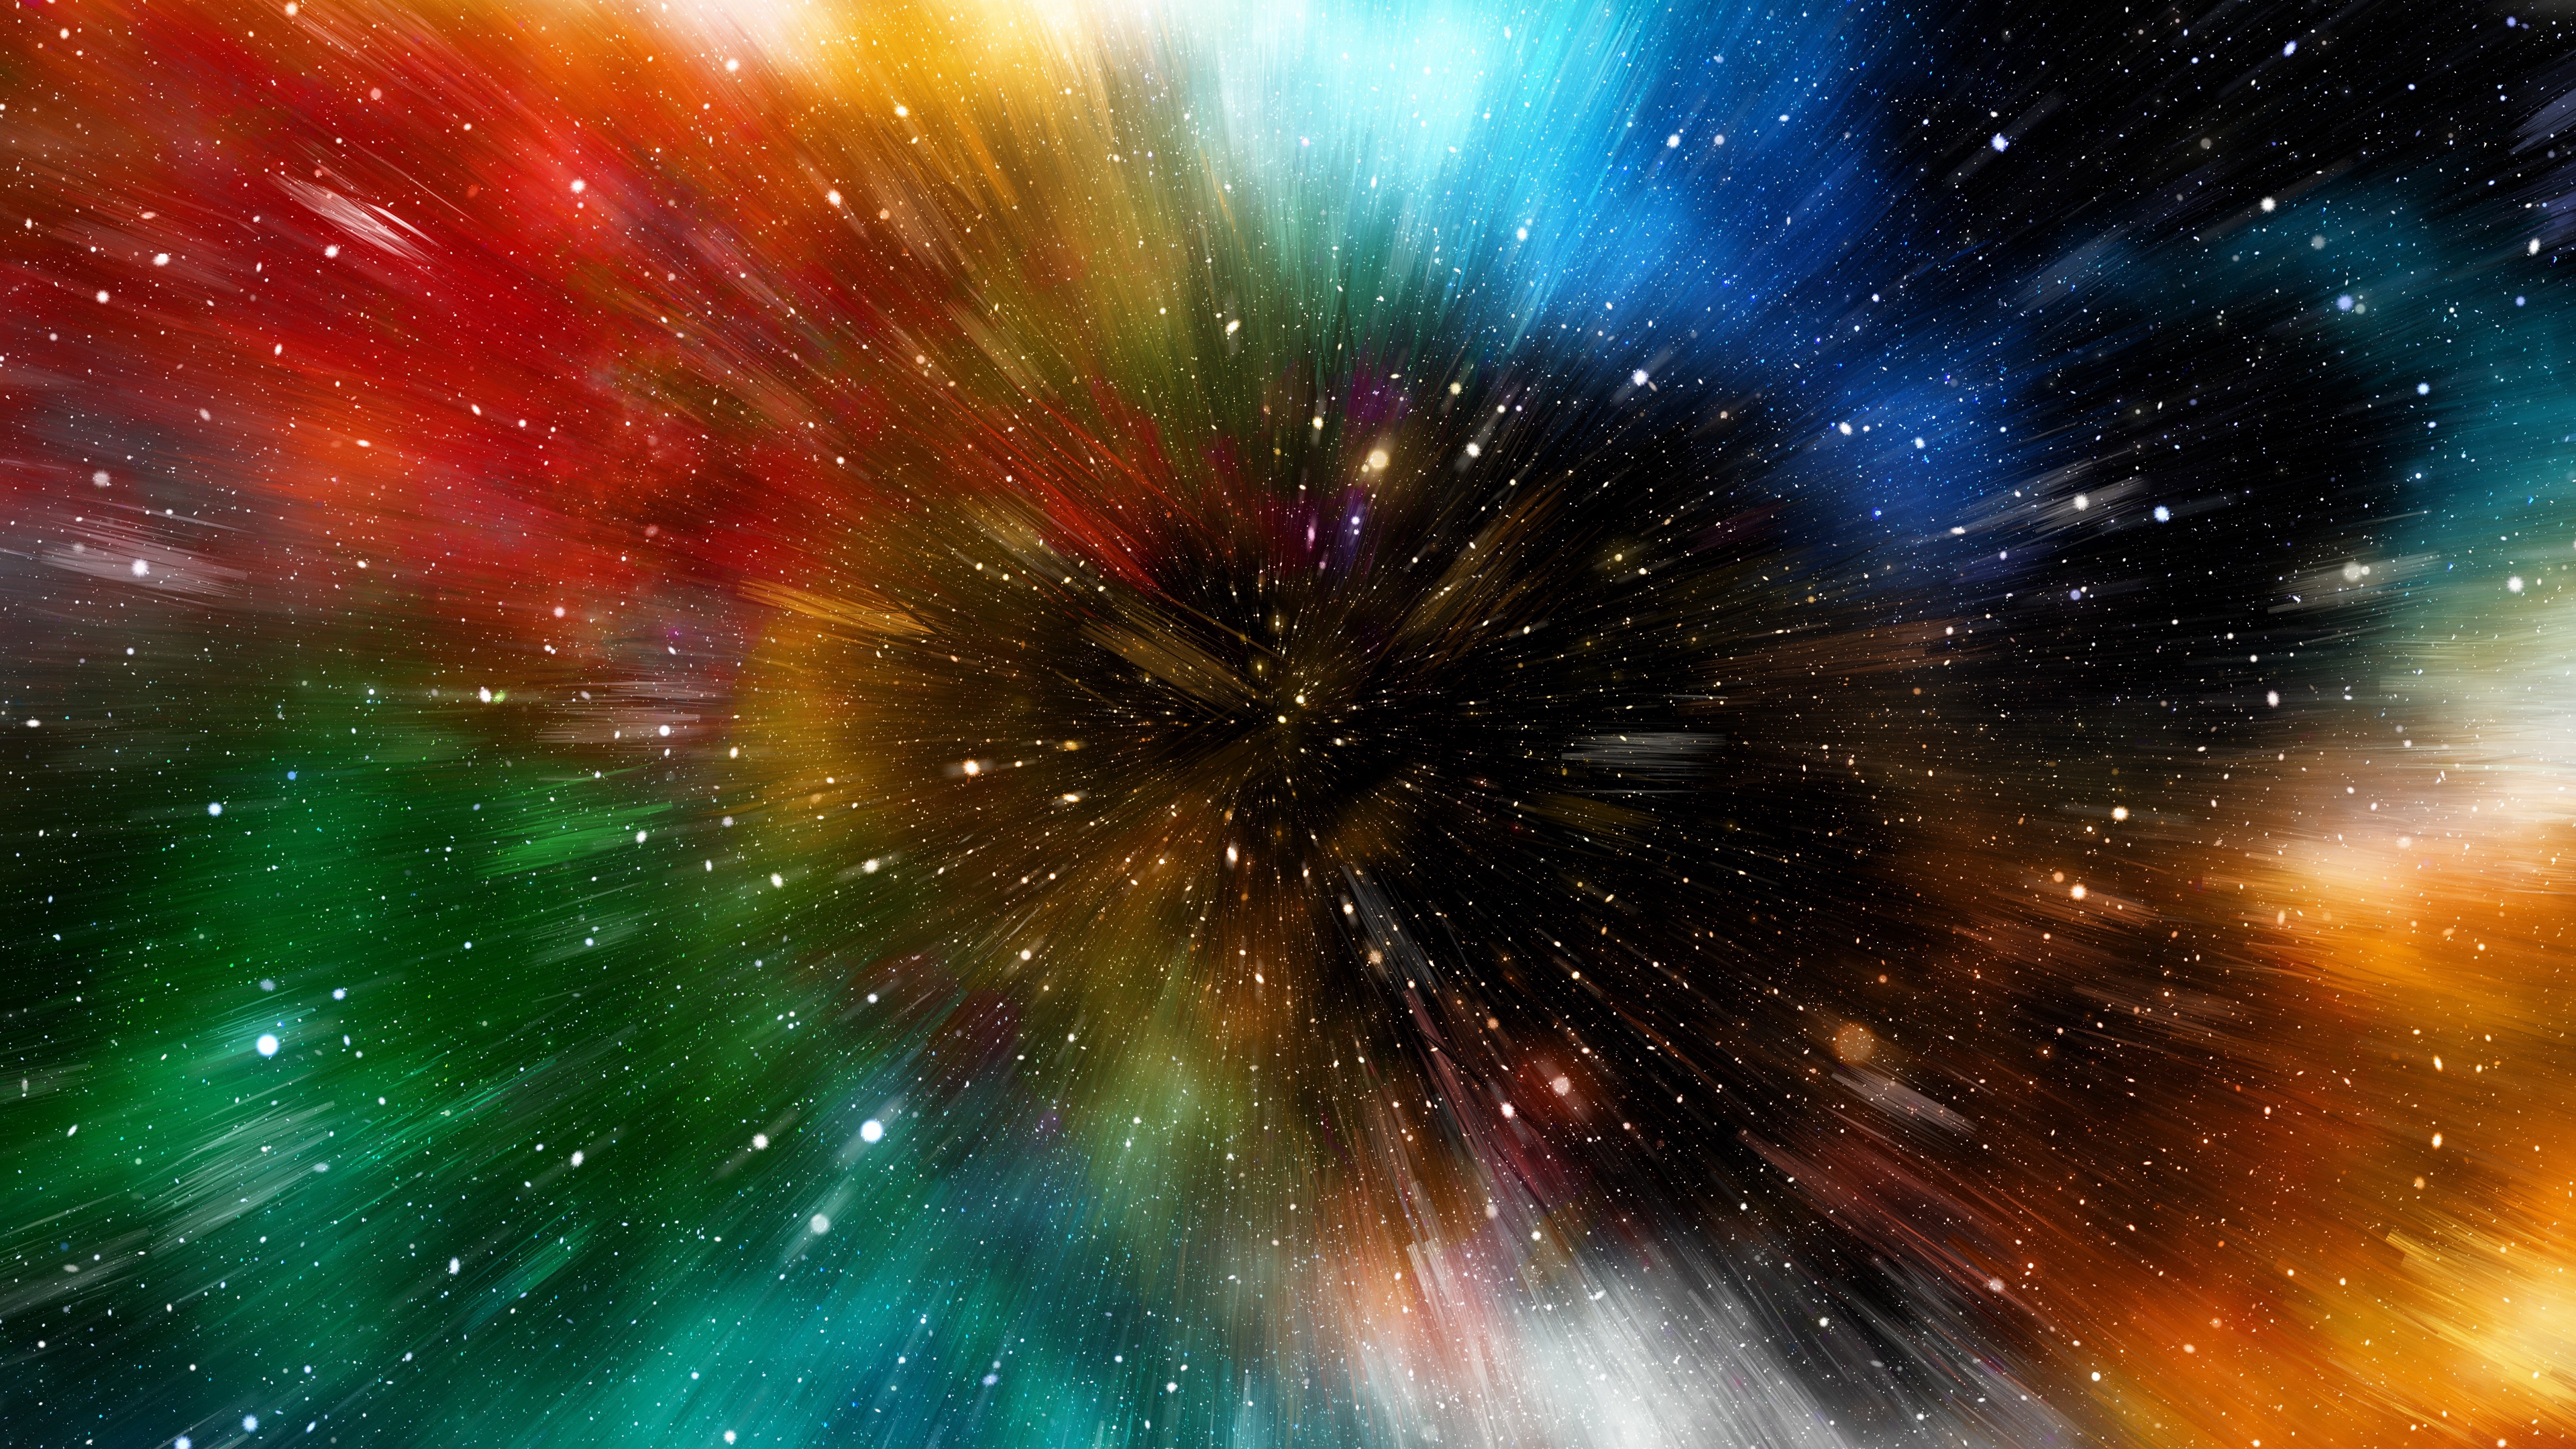 universe galaxy multicolored immersion 4k 1539370483 - universe, galaxy, multicolored, immersion 4k - Universe, multicolored, Galaxy